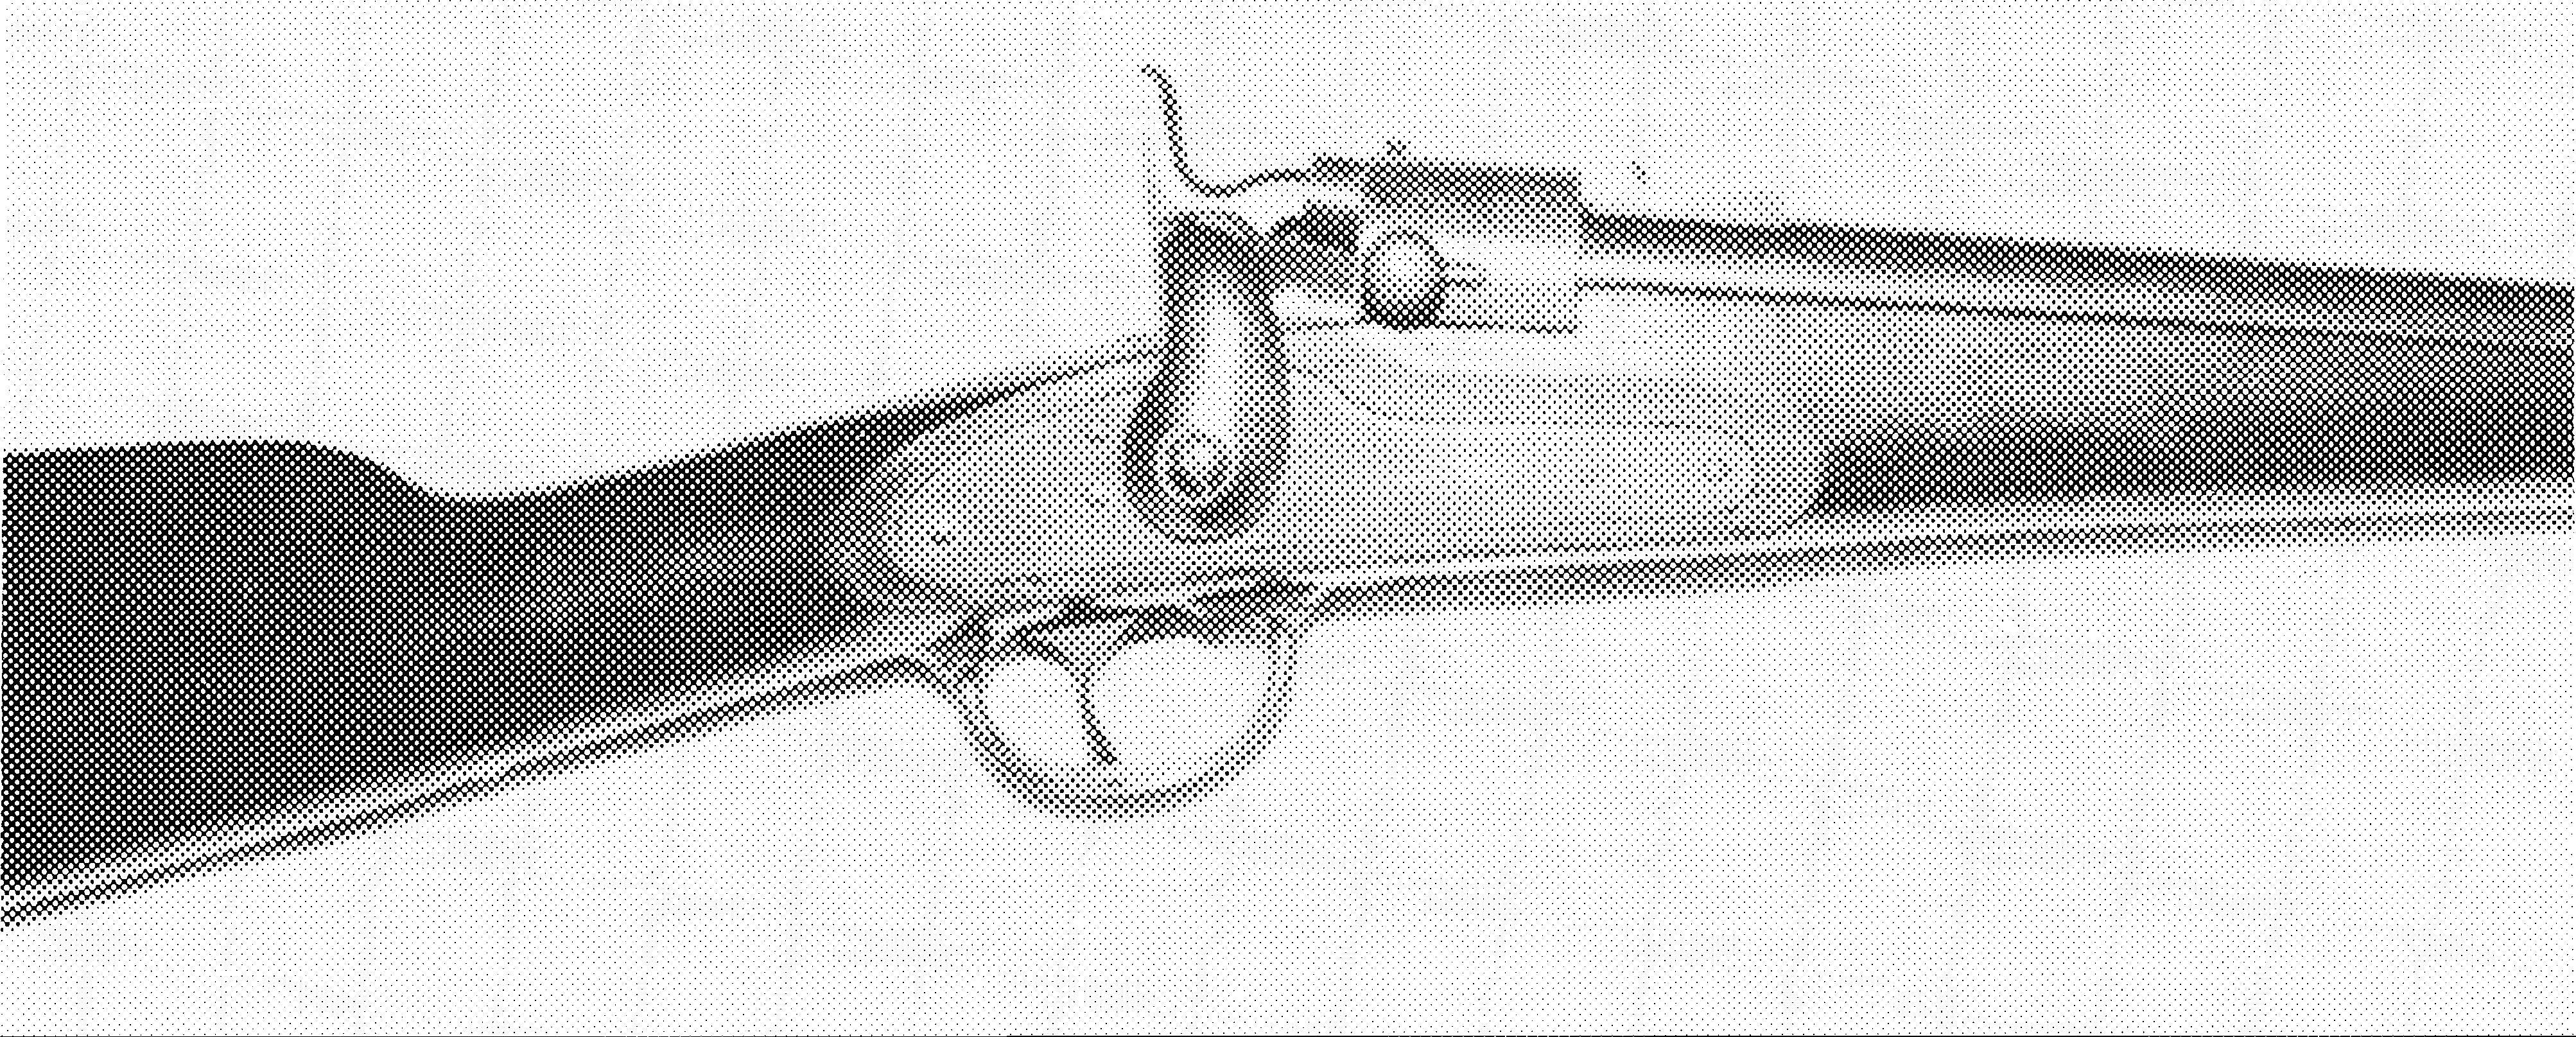 Model 1864 Carbine